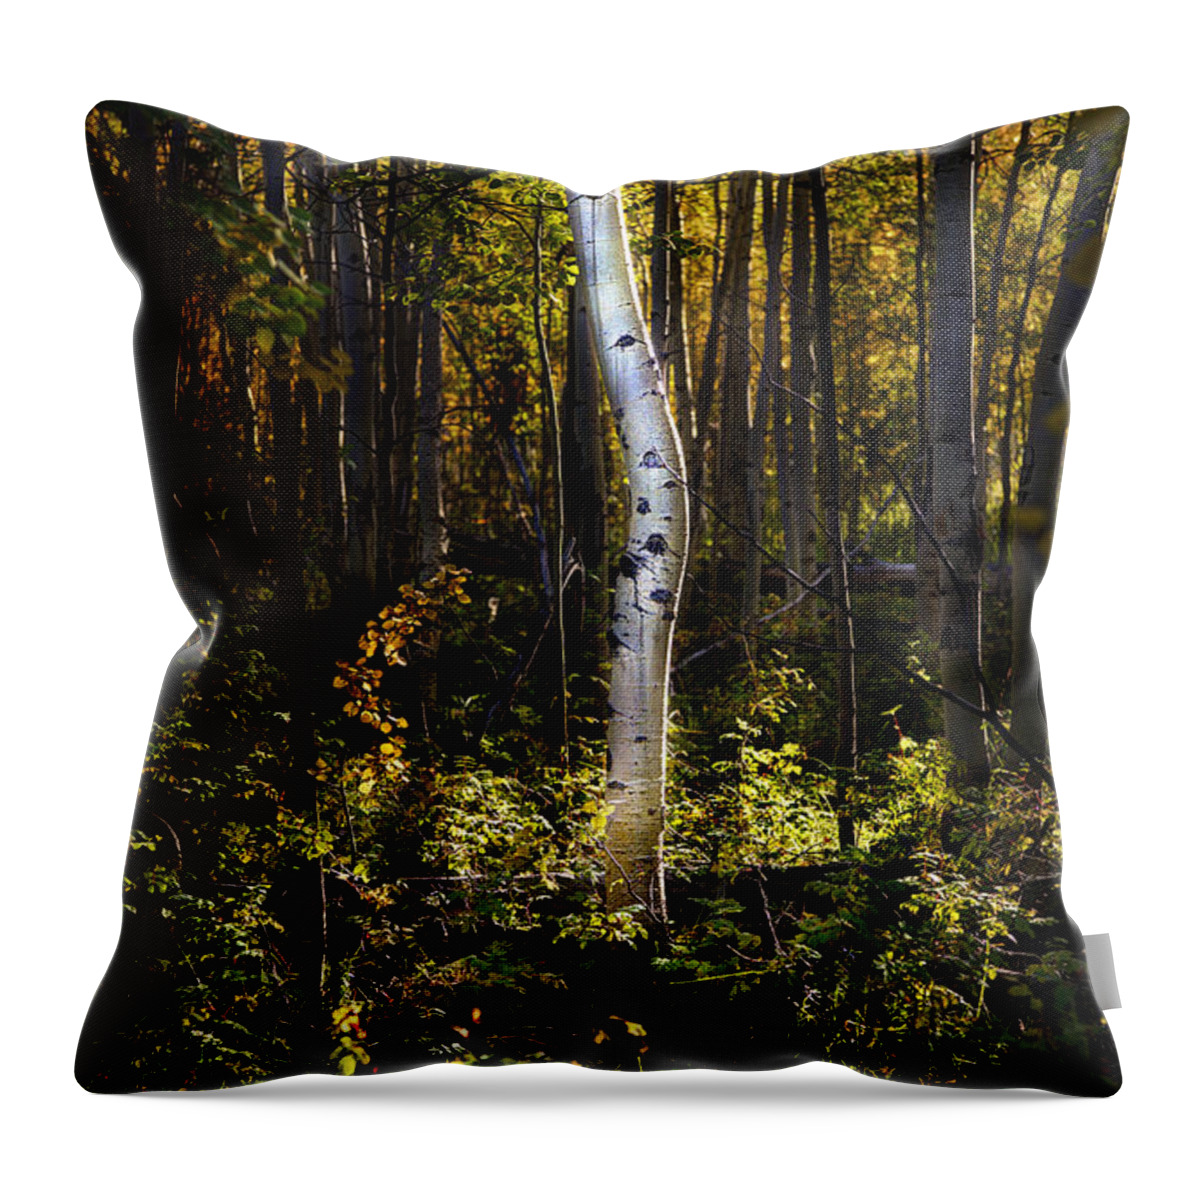 Beartooth Throw Pillow featuring the photograph Beaver Aspen Grove by Craig J Satterlee